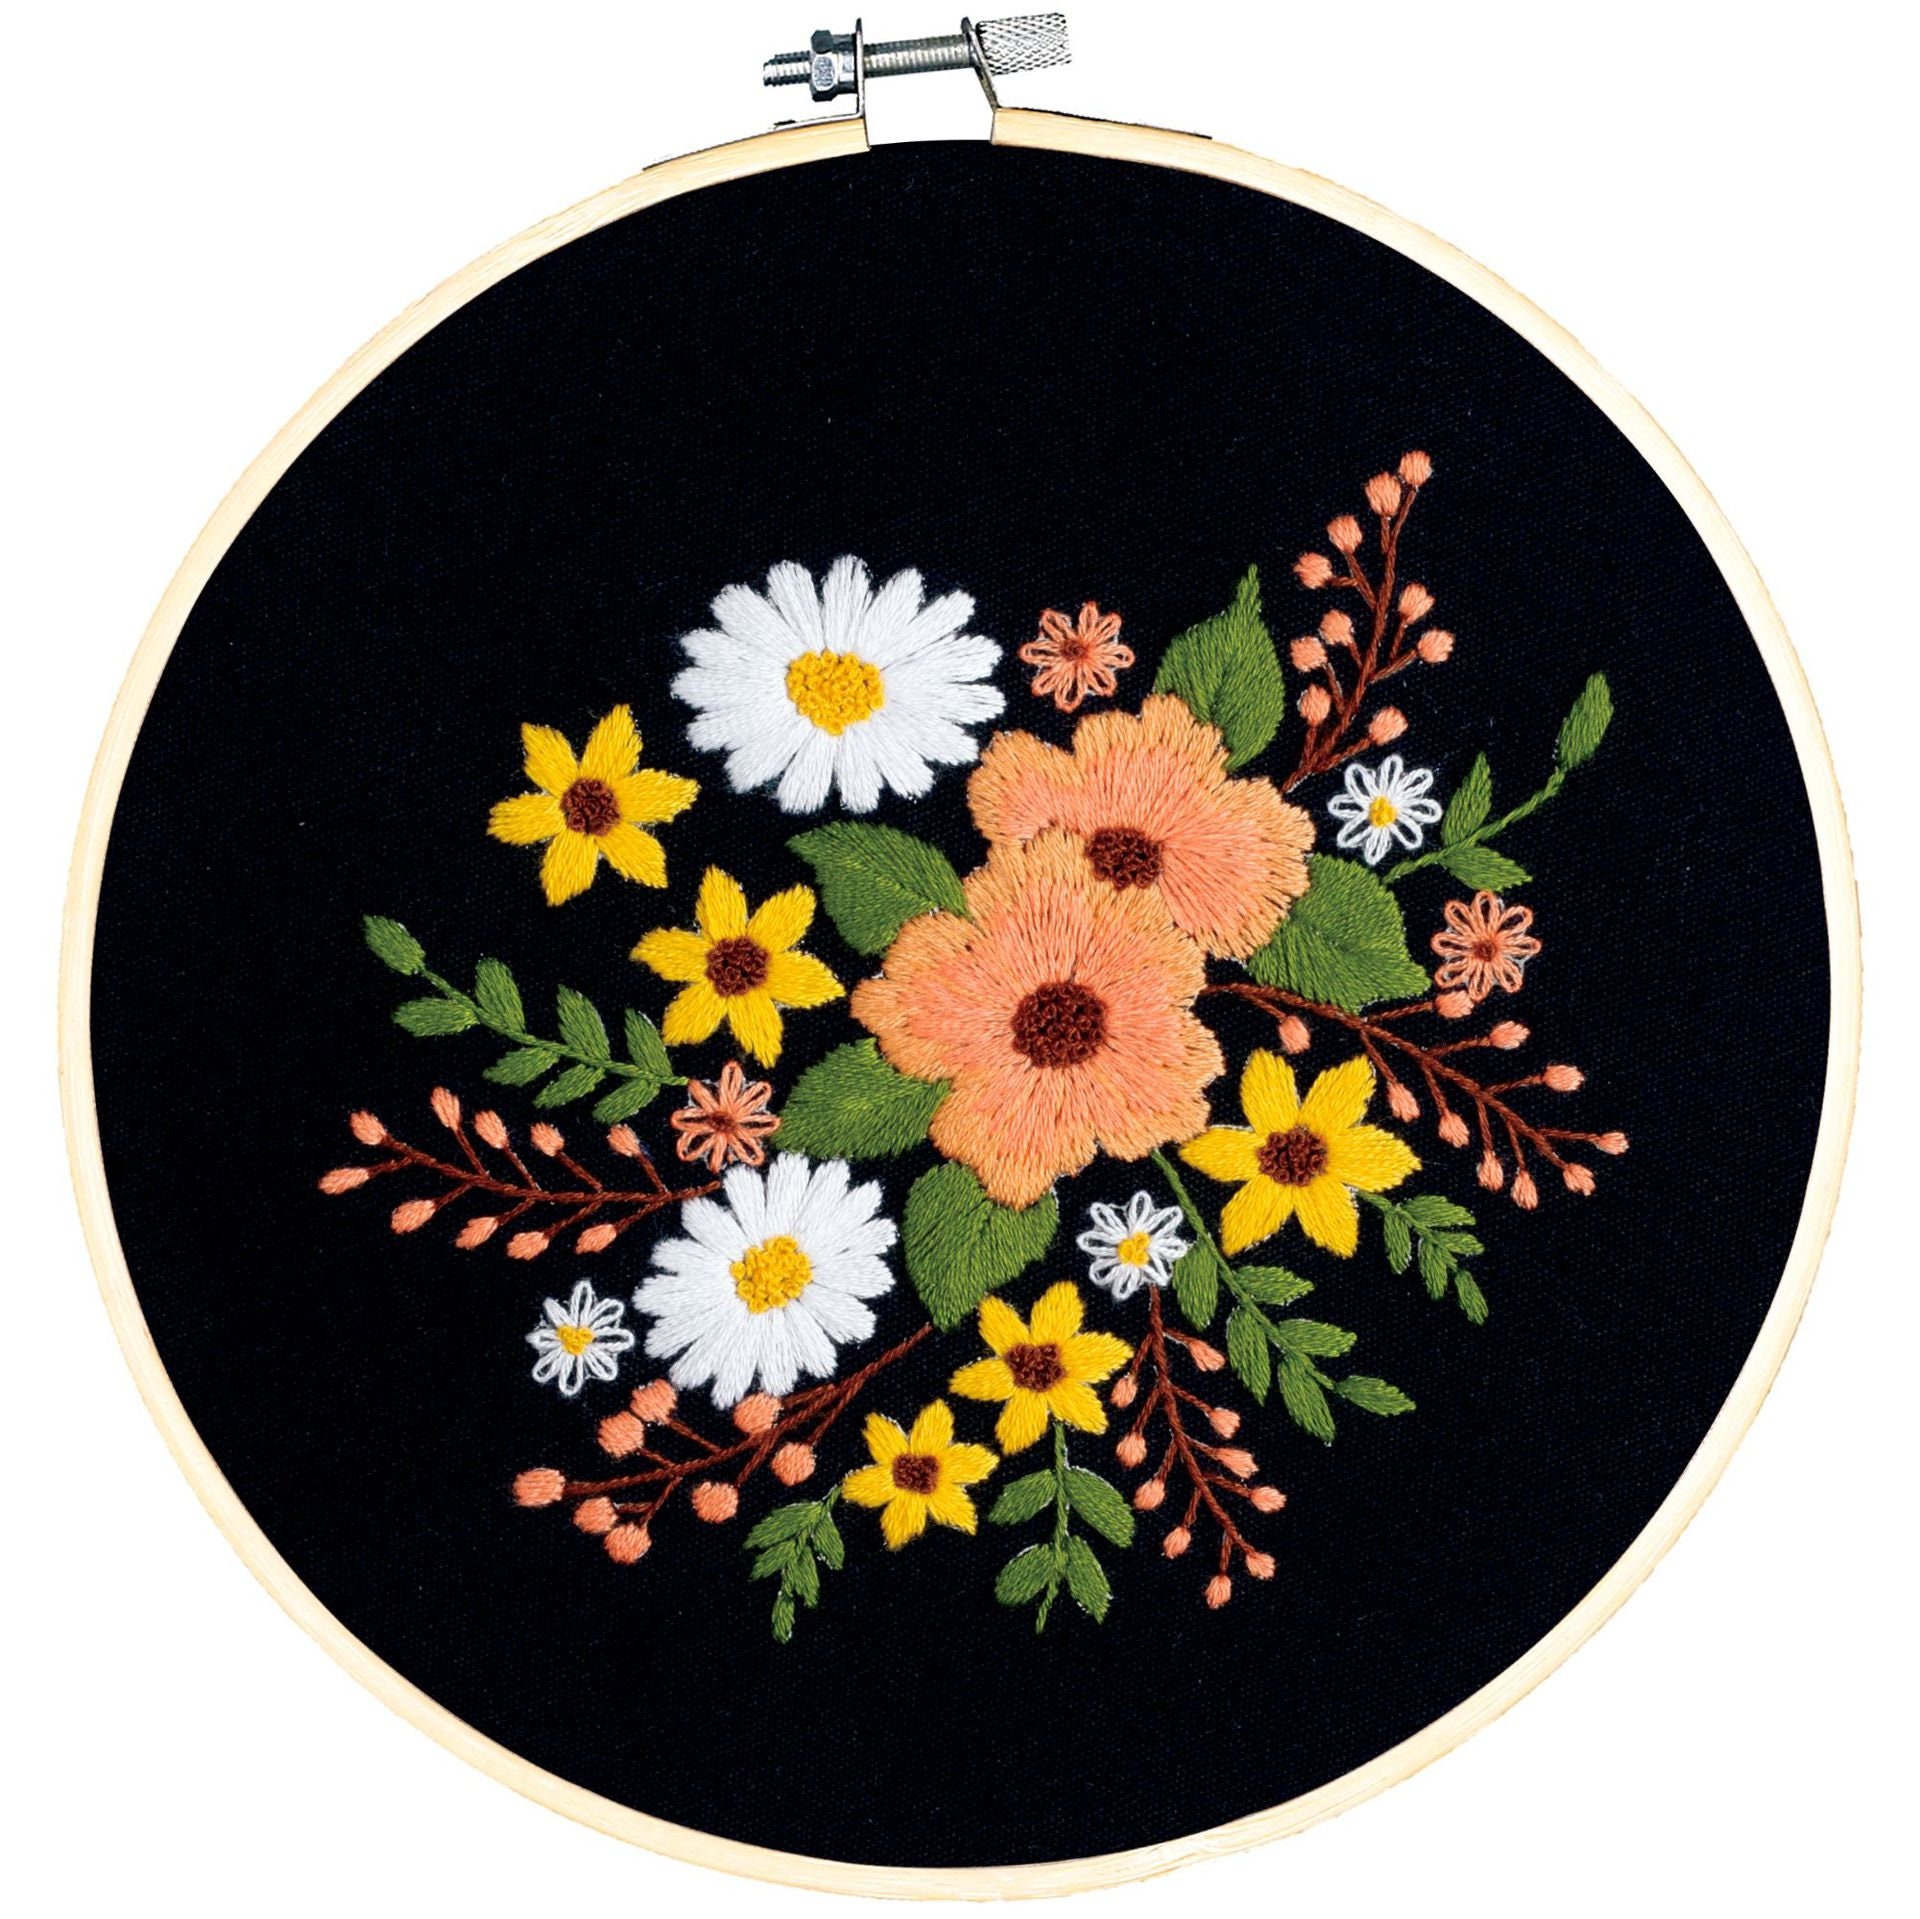  Craftwiz Embroidery Starter Kit - Patterns, Hoop